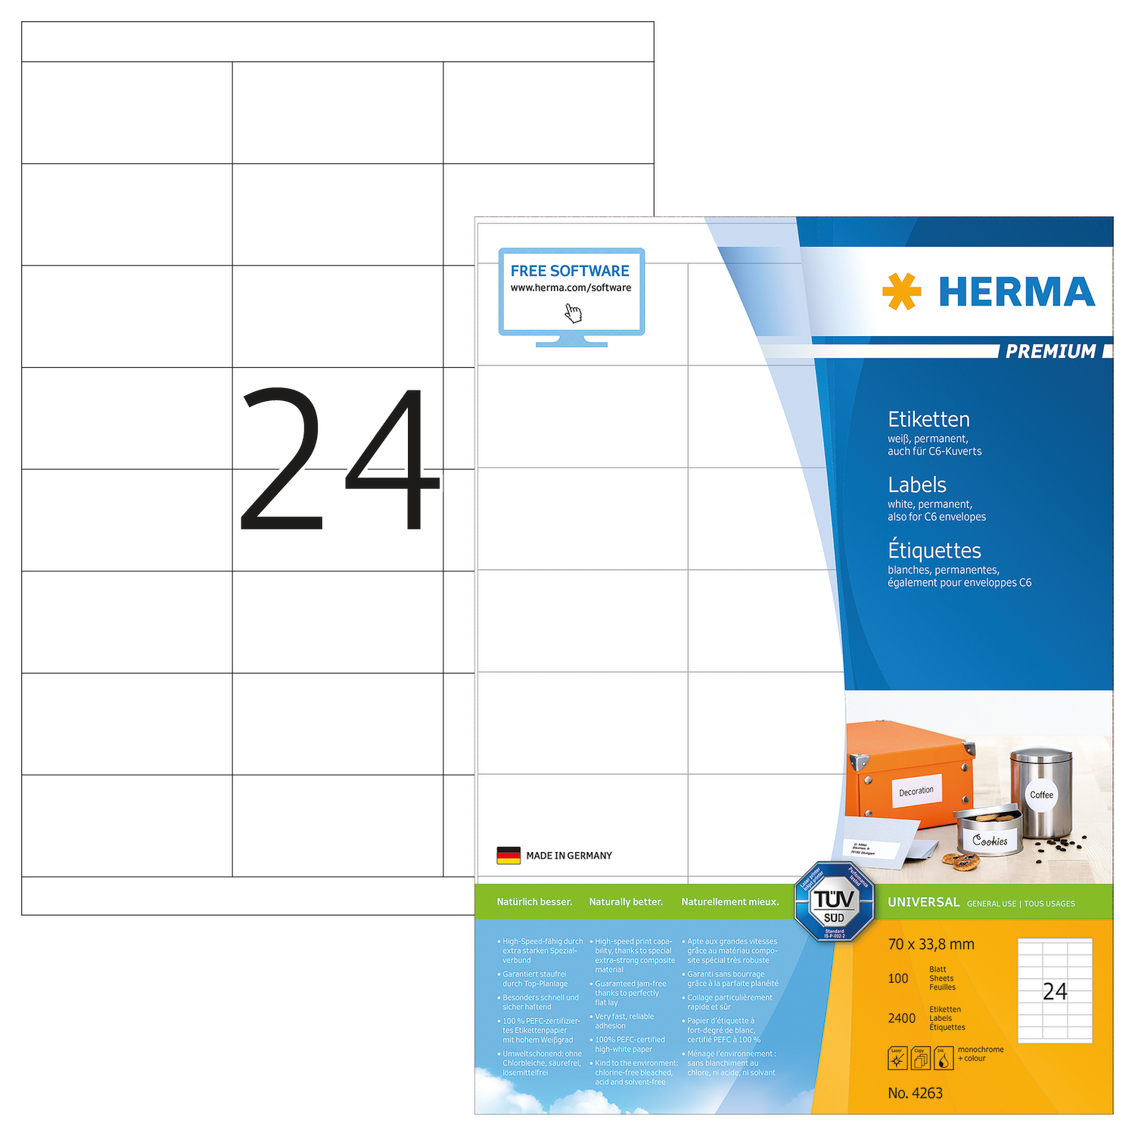 HERMA Etiquettes 4263 4263 70x33.8mm 2400pcs. 100 flls.